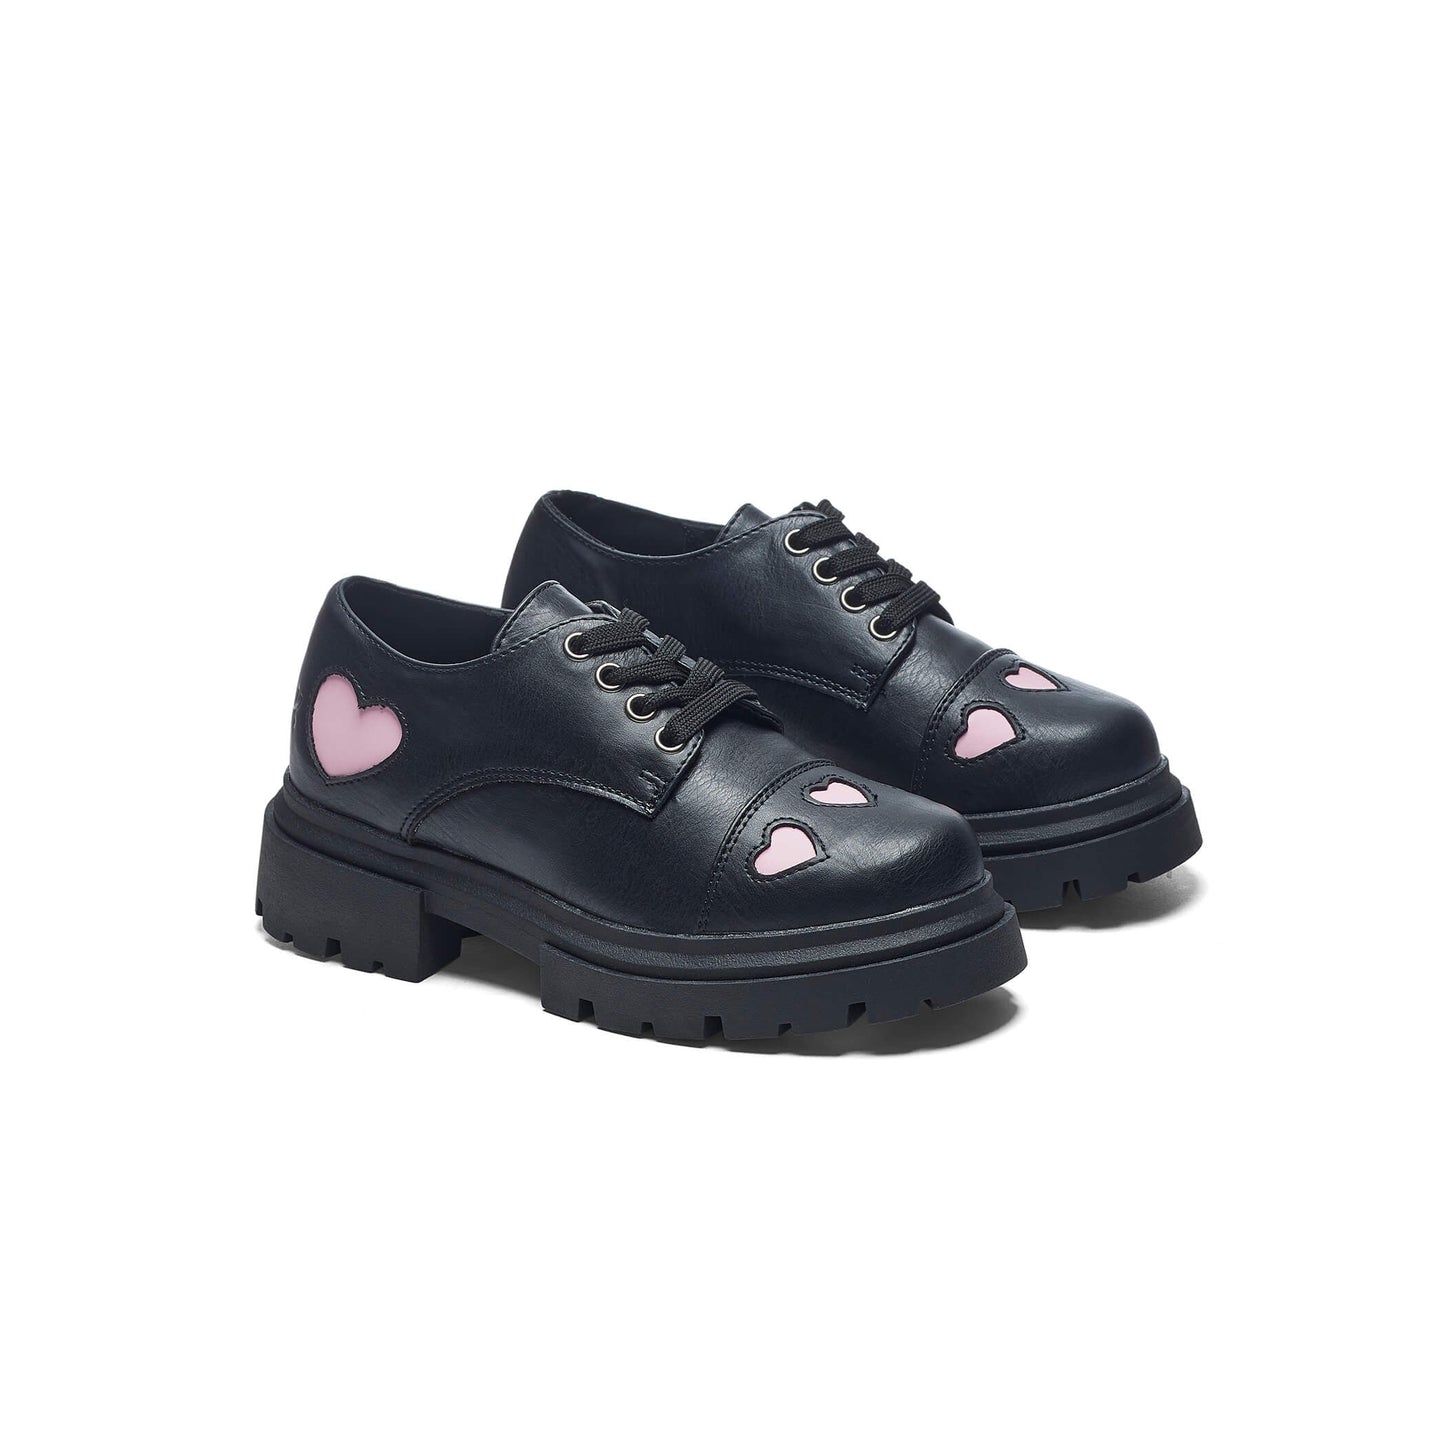 Lil’ Tennin Heart Shoes - Shoes - KOI Footwear - Black - Three-Quarter View